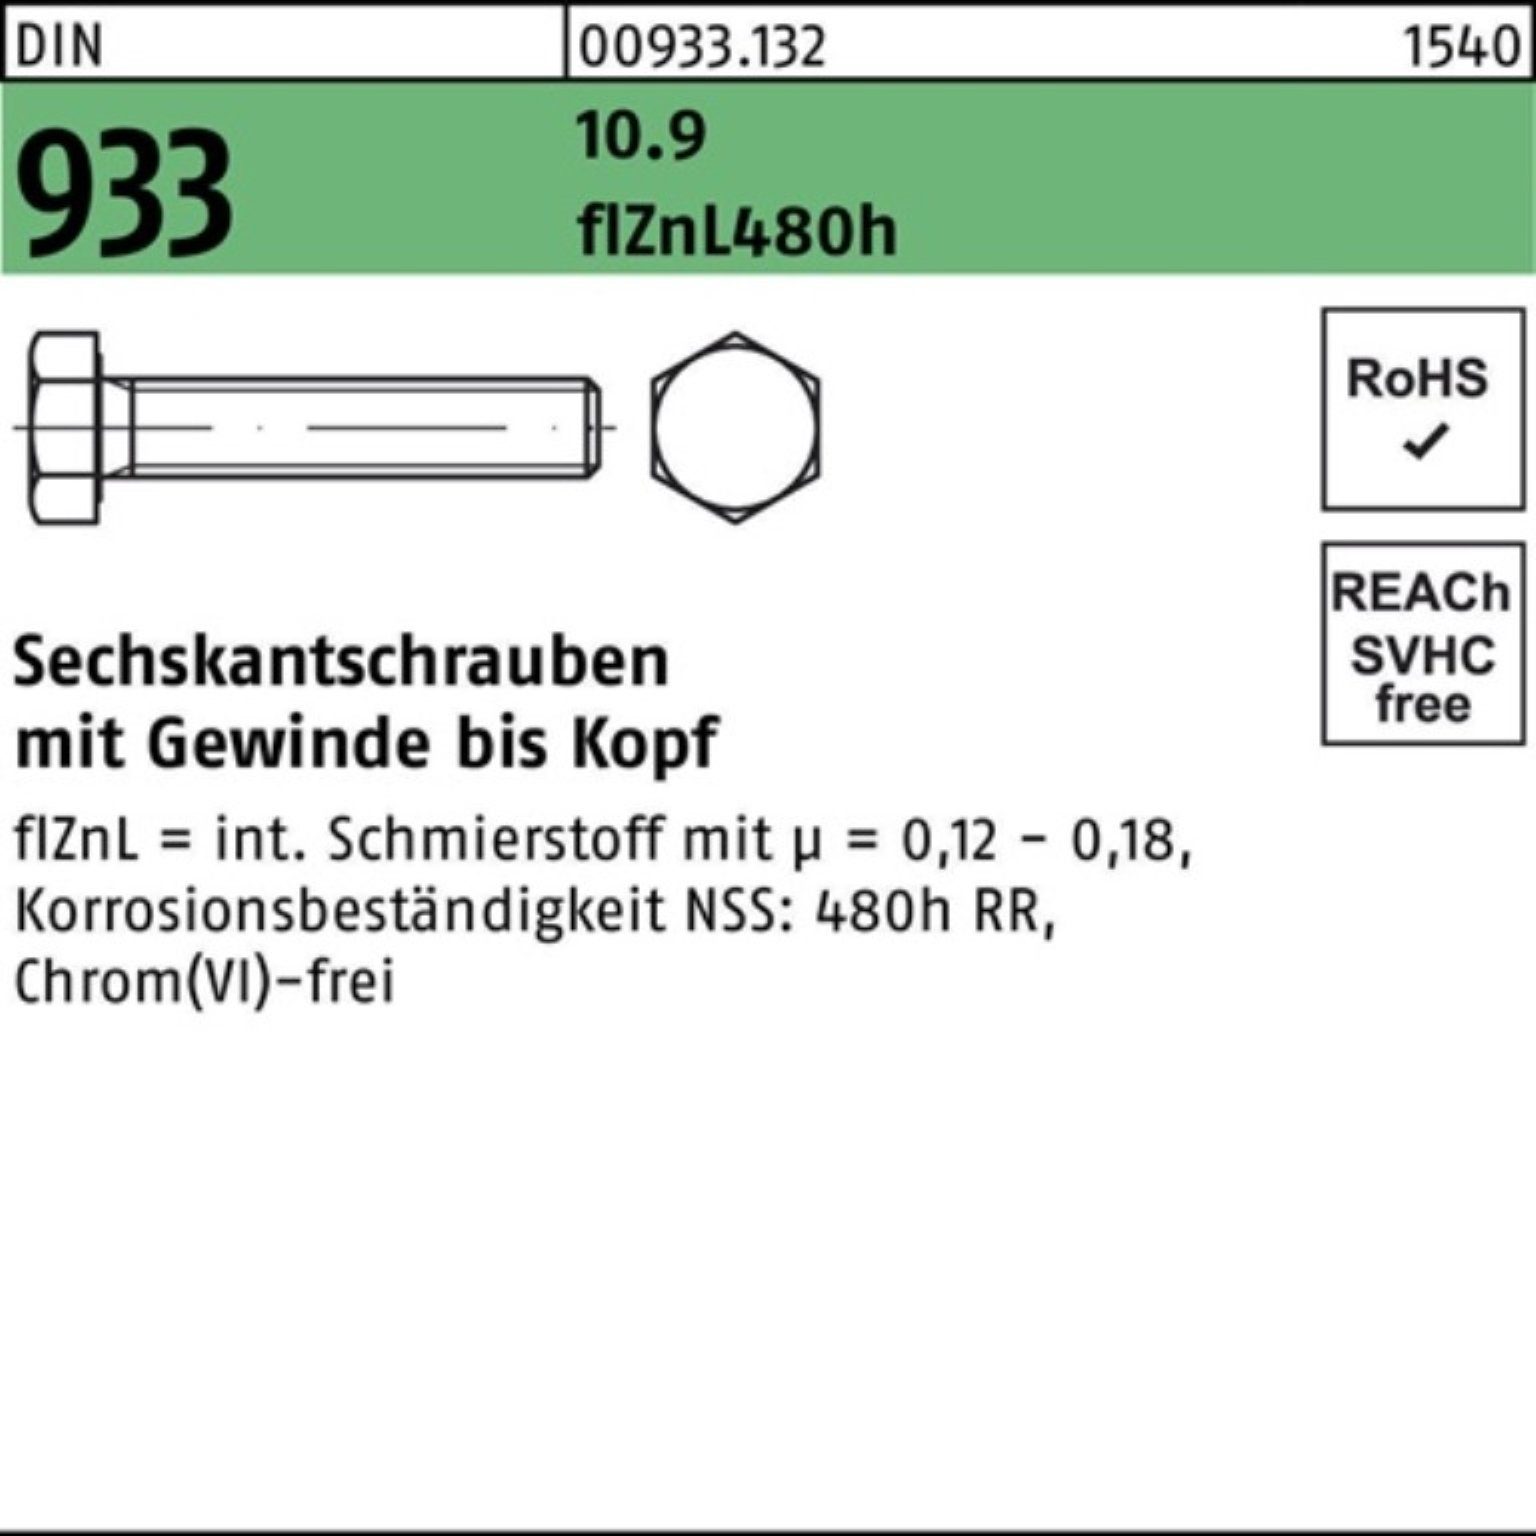 Reyher Sechskantschraube 200er Pack Sechskantschraube DIN 933 VG M8x 25 10.9 flZnL/nc/x/x/480h